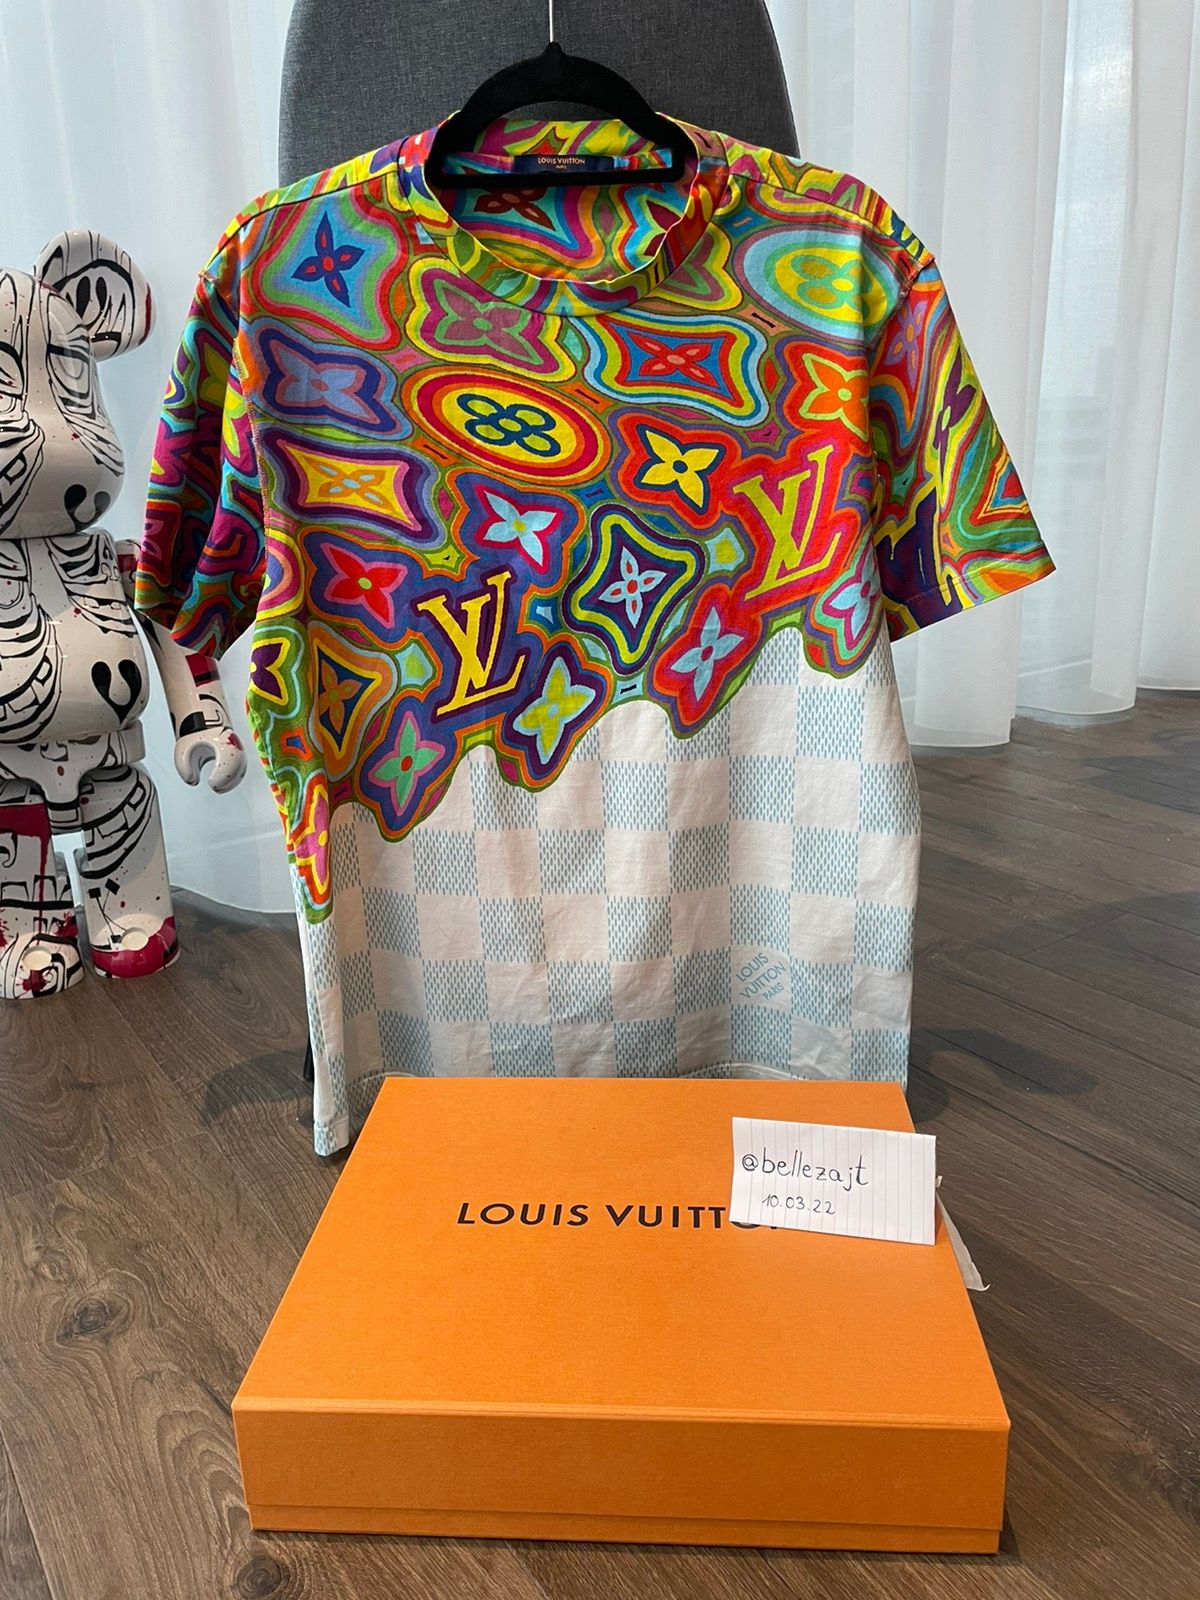 Louis Vuitton Printed Damier T-Shirt (XL)